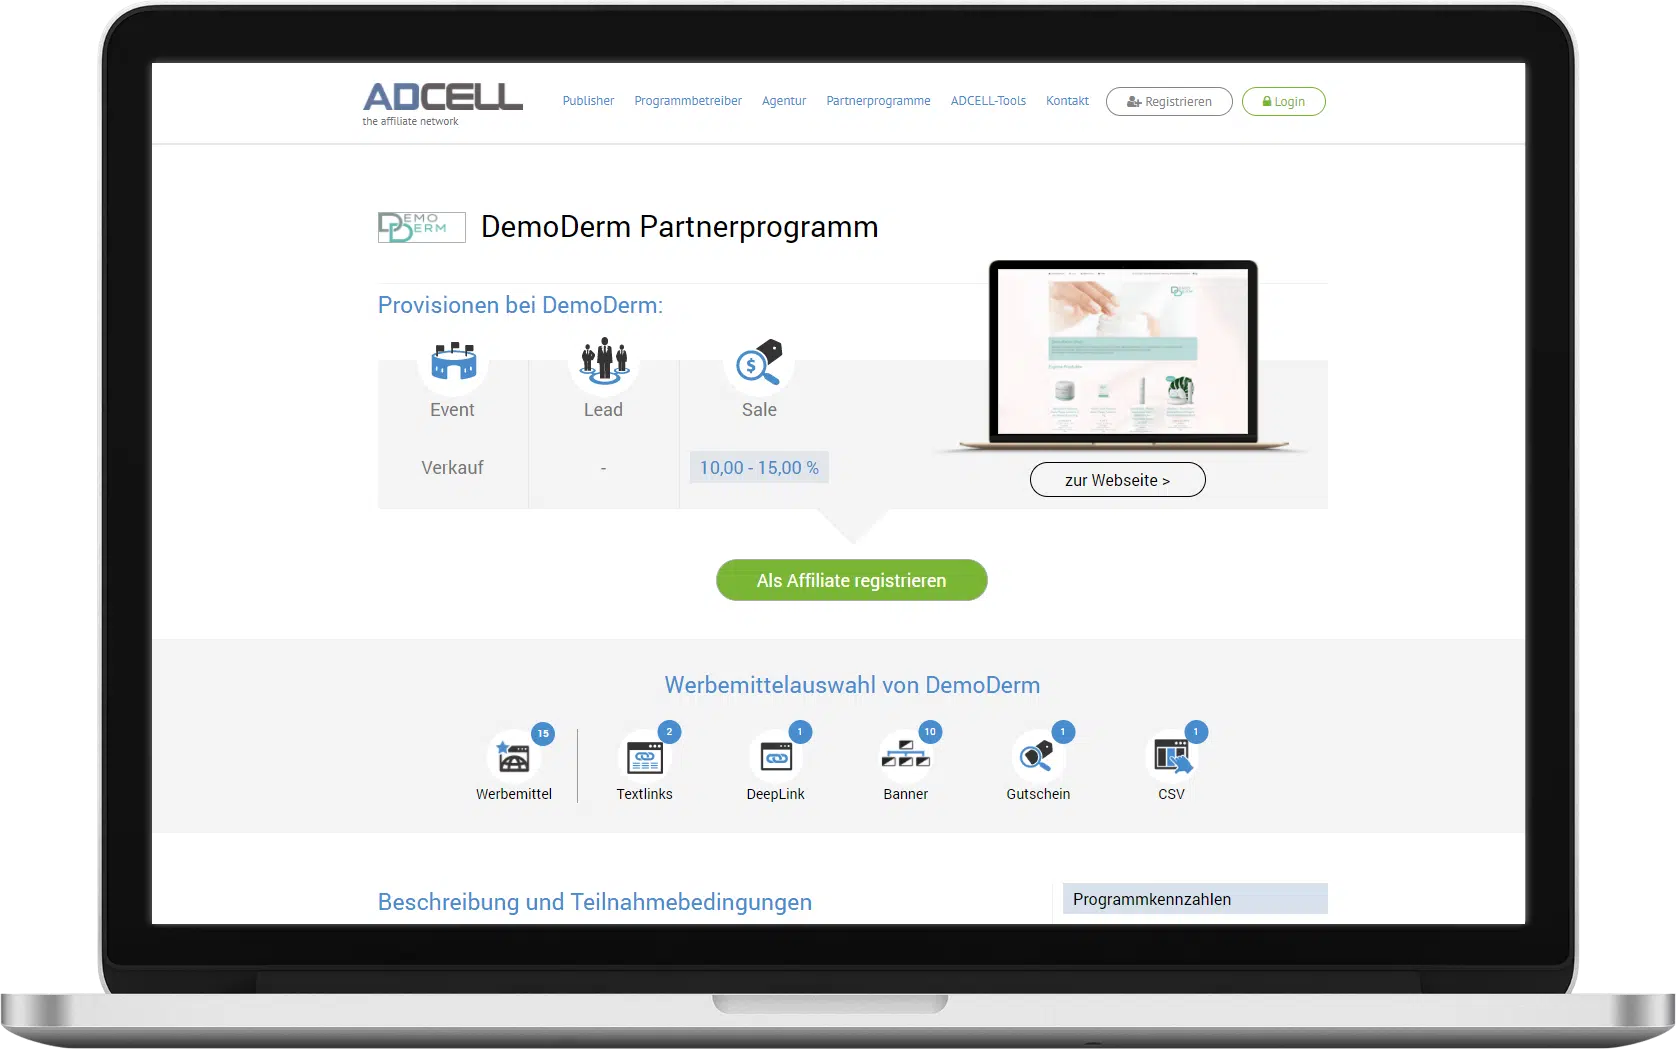 DemoDerm Partnerprogramm (Affiliate)